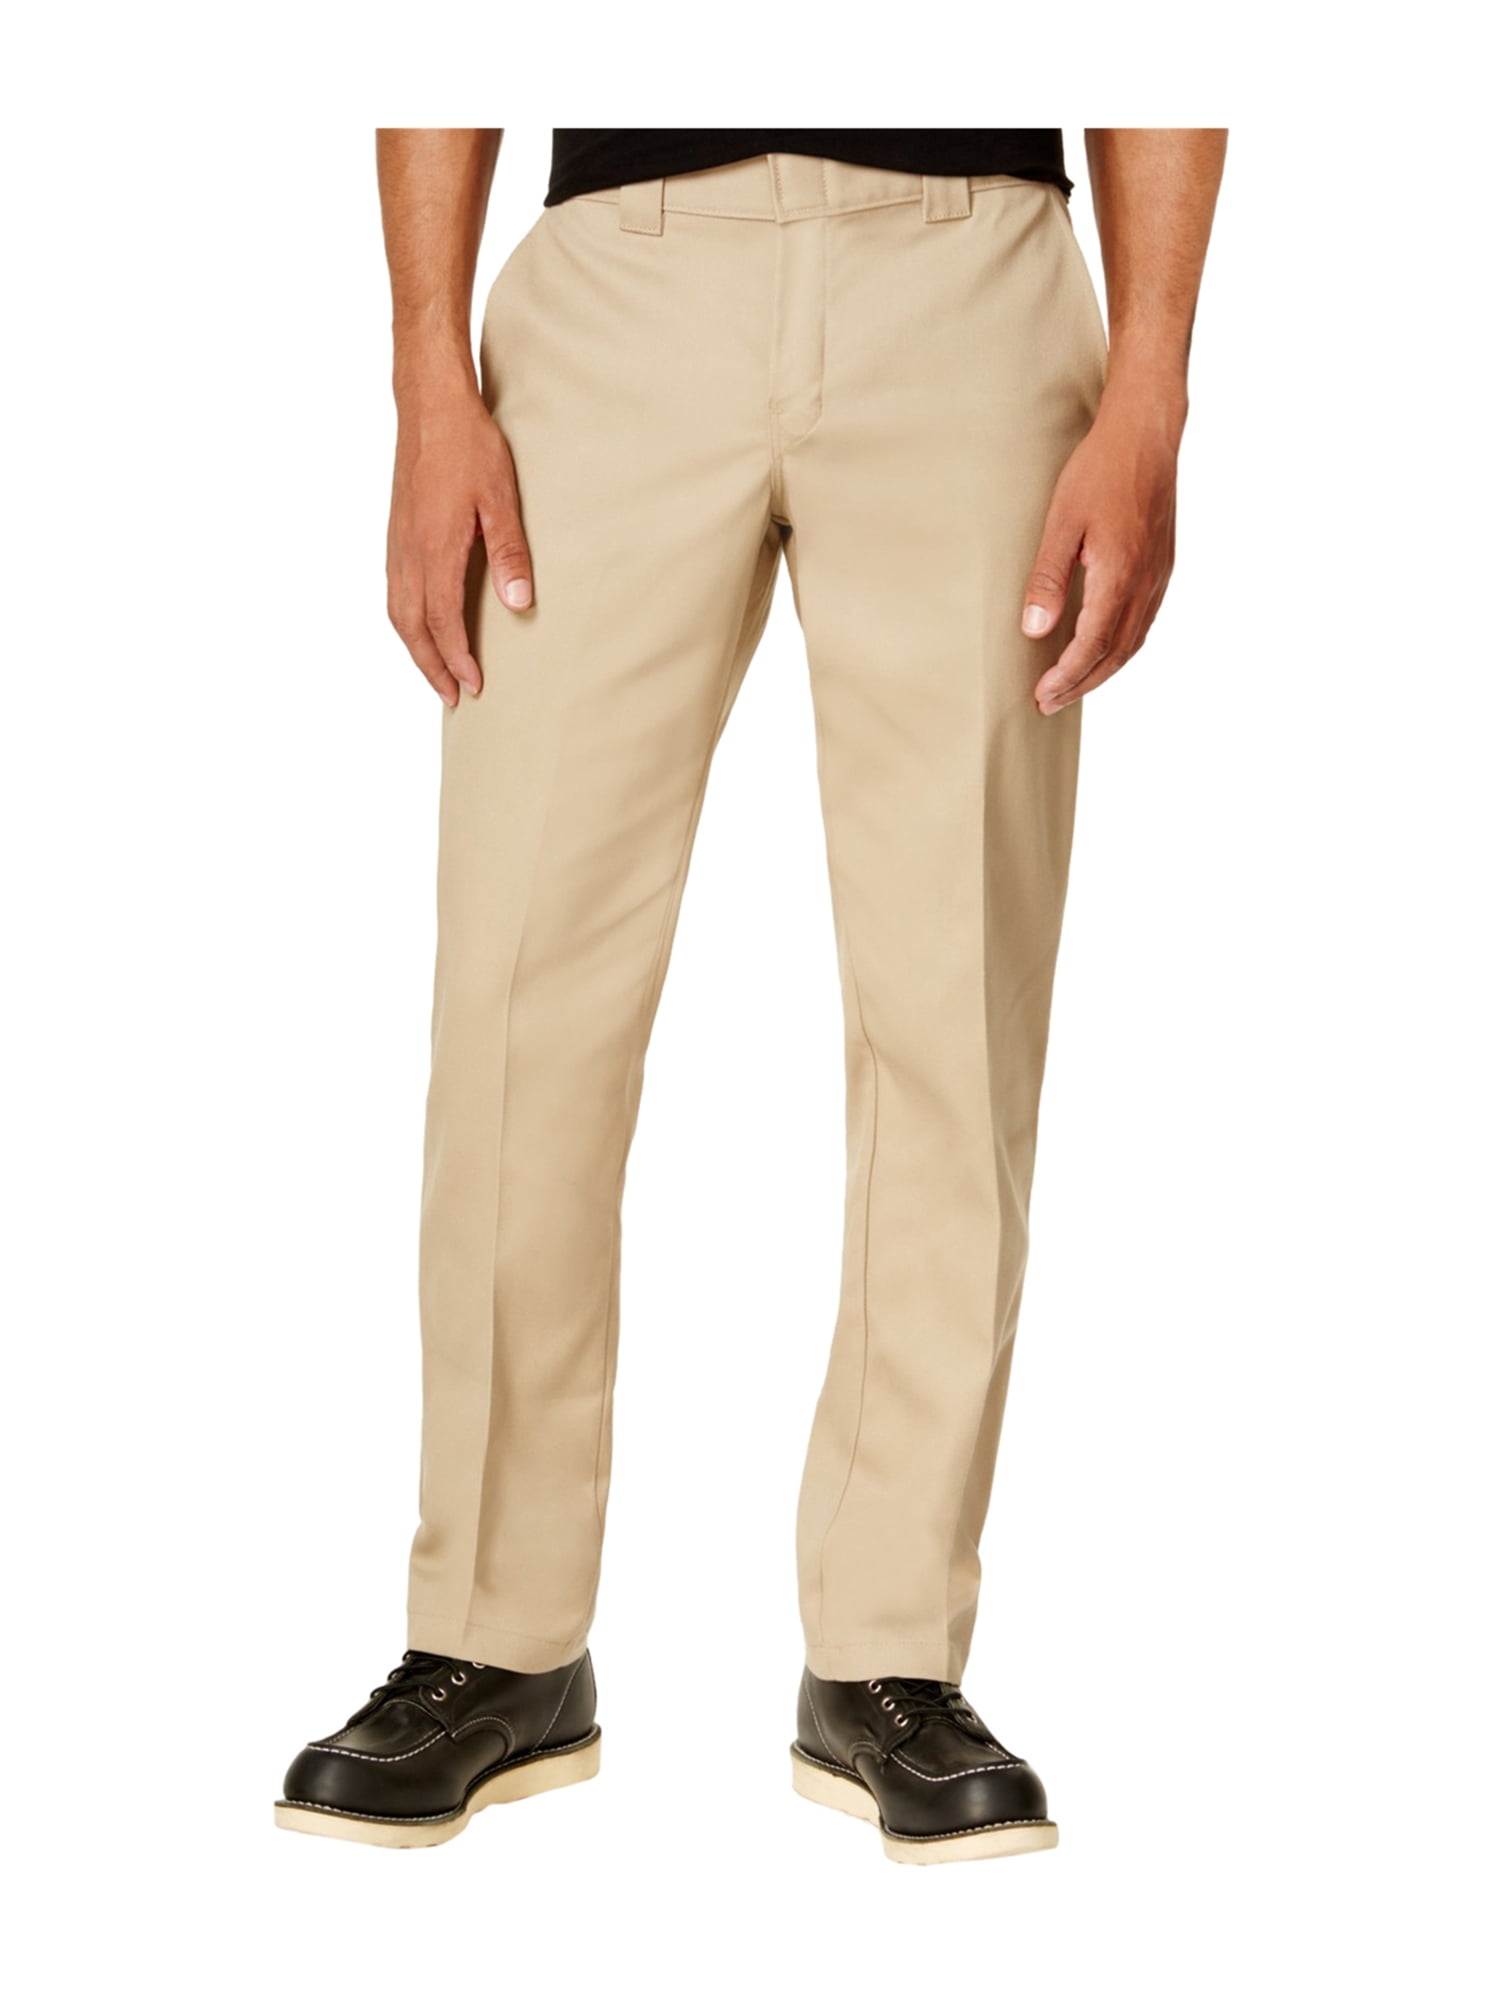 Dickies Mens Flex Work Casual Chino Pants khaki 30x32 | Walmart Canada